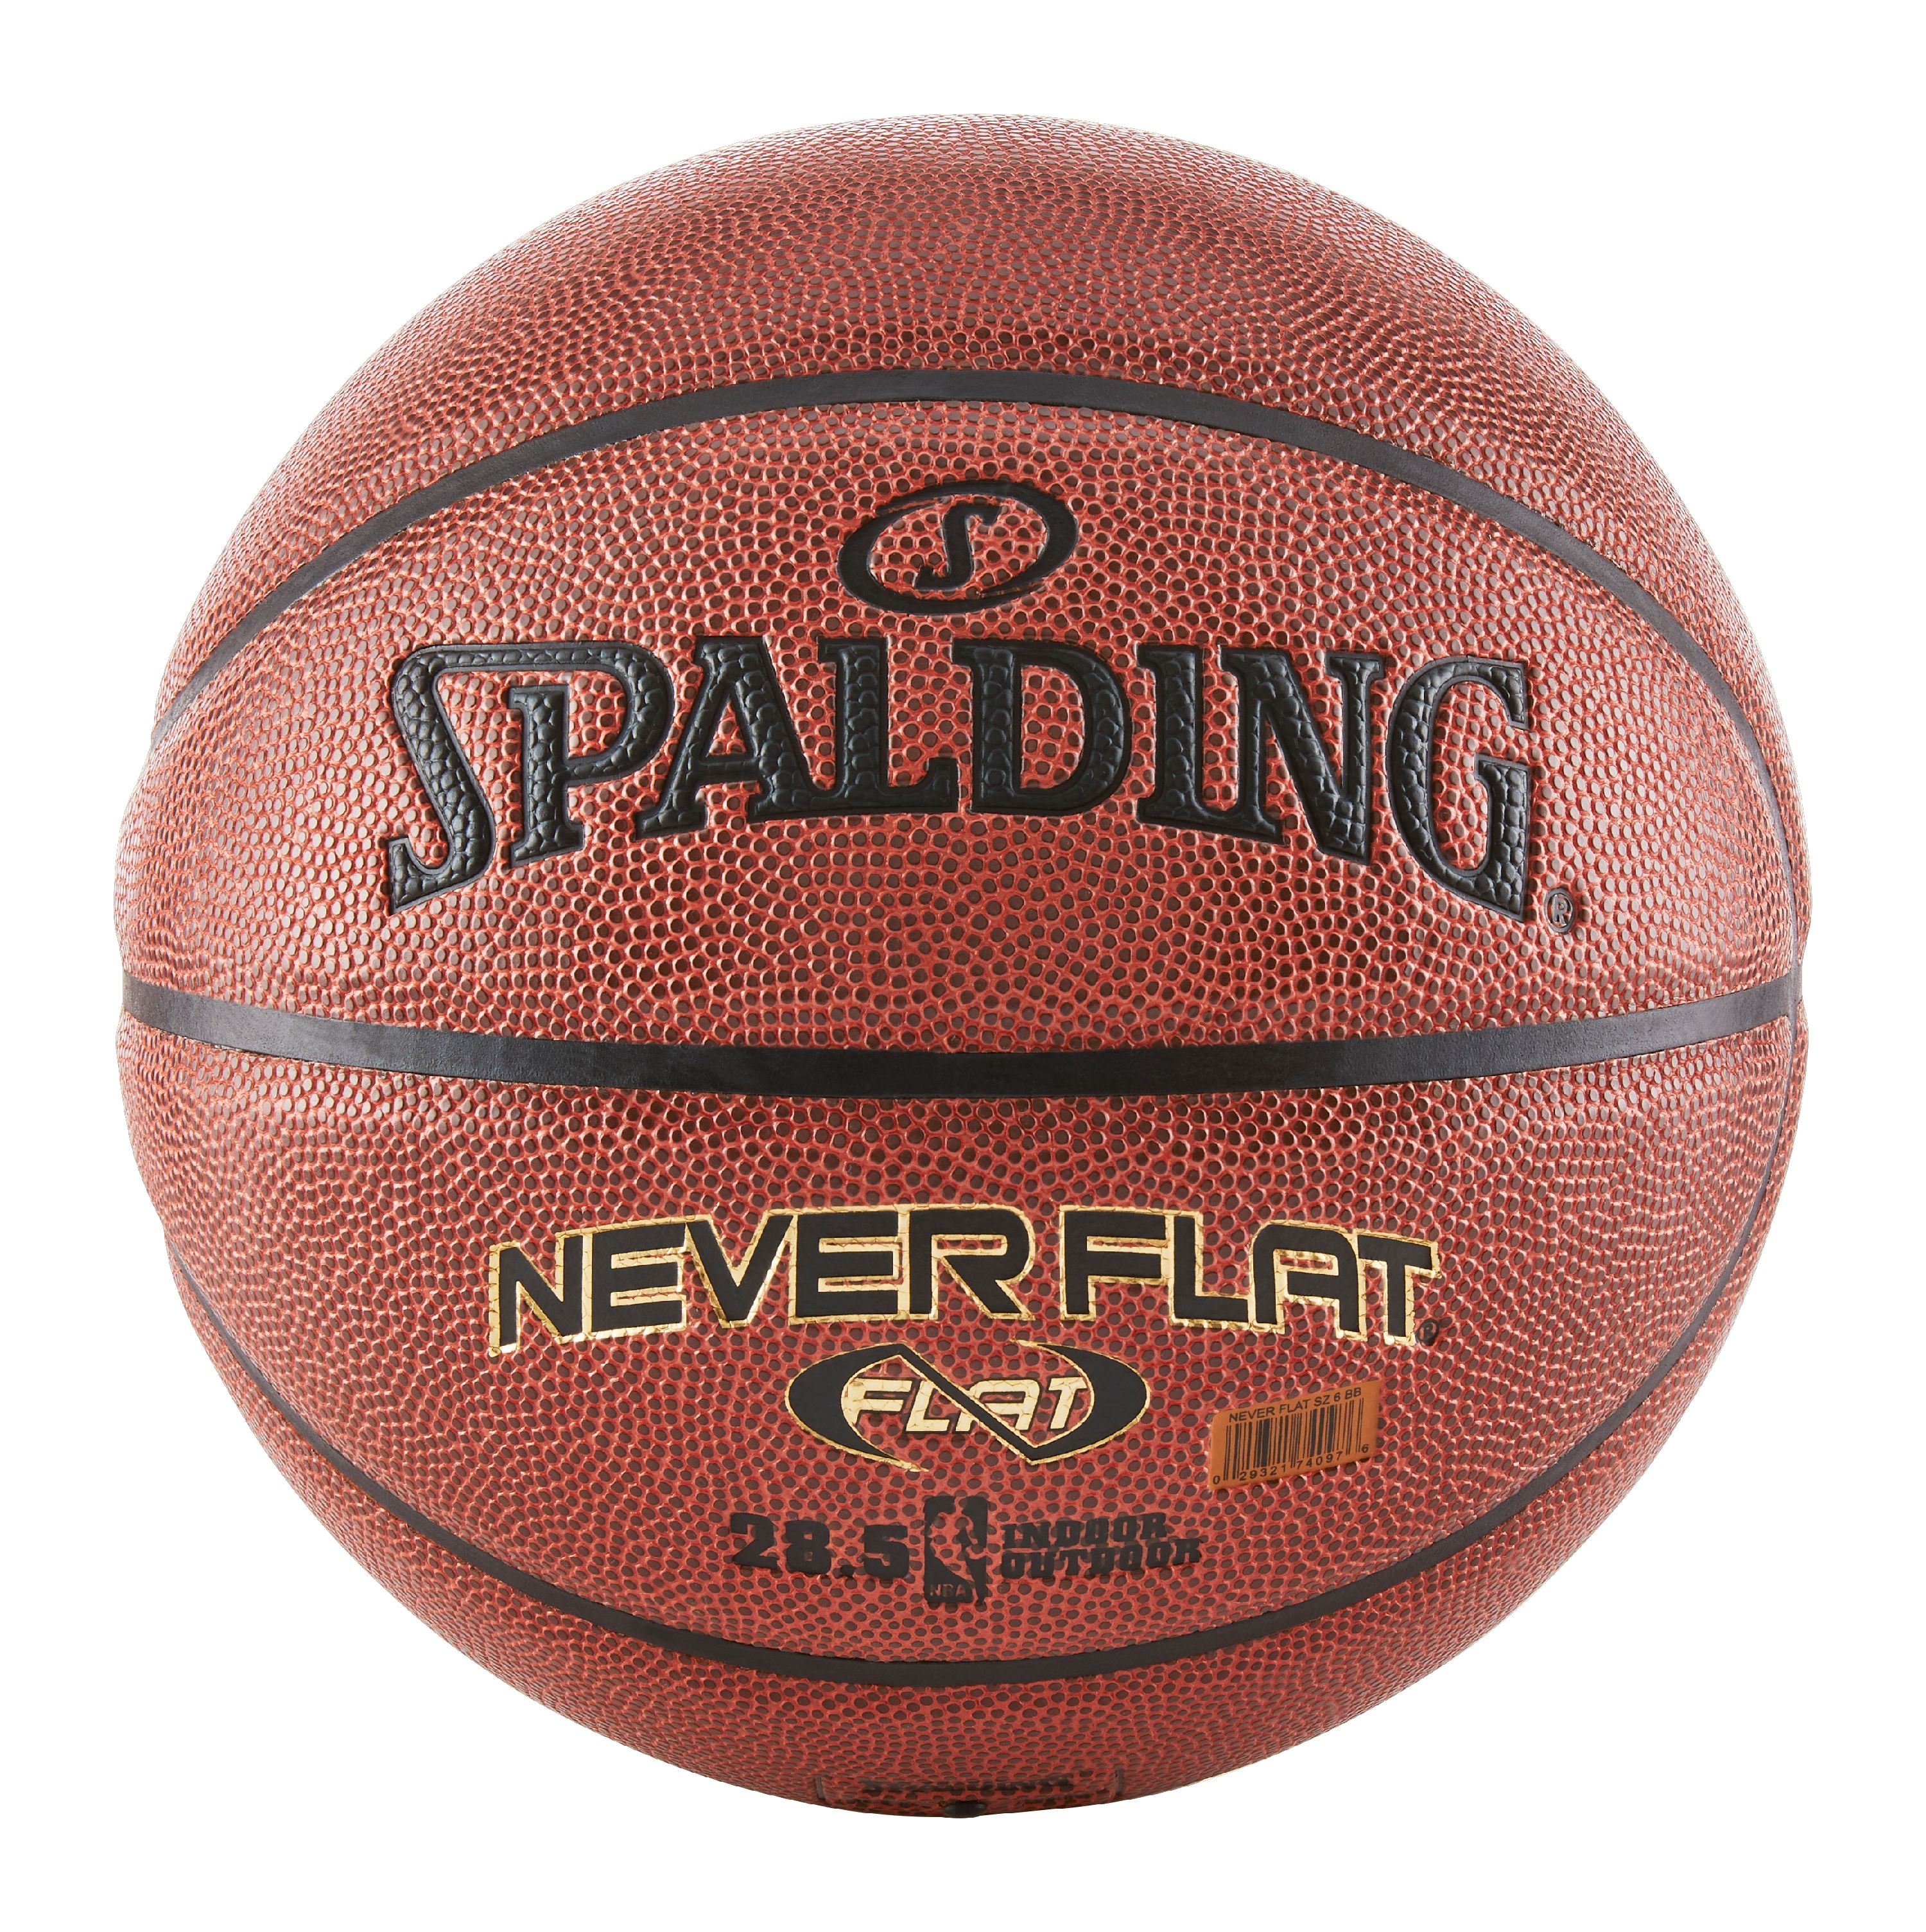 Spalding NBA Neverflat Premium Basketball - image 4 of 6